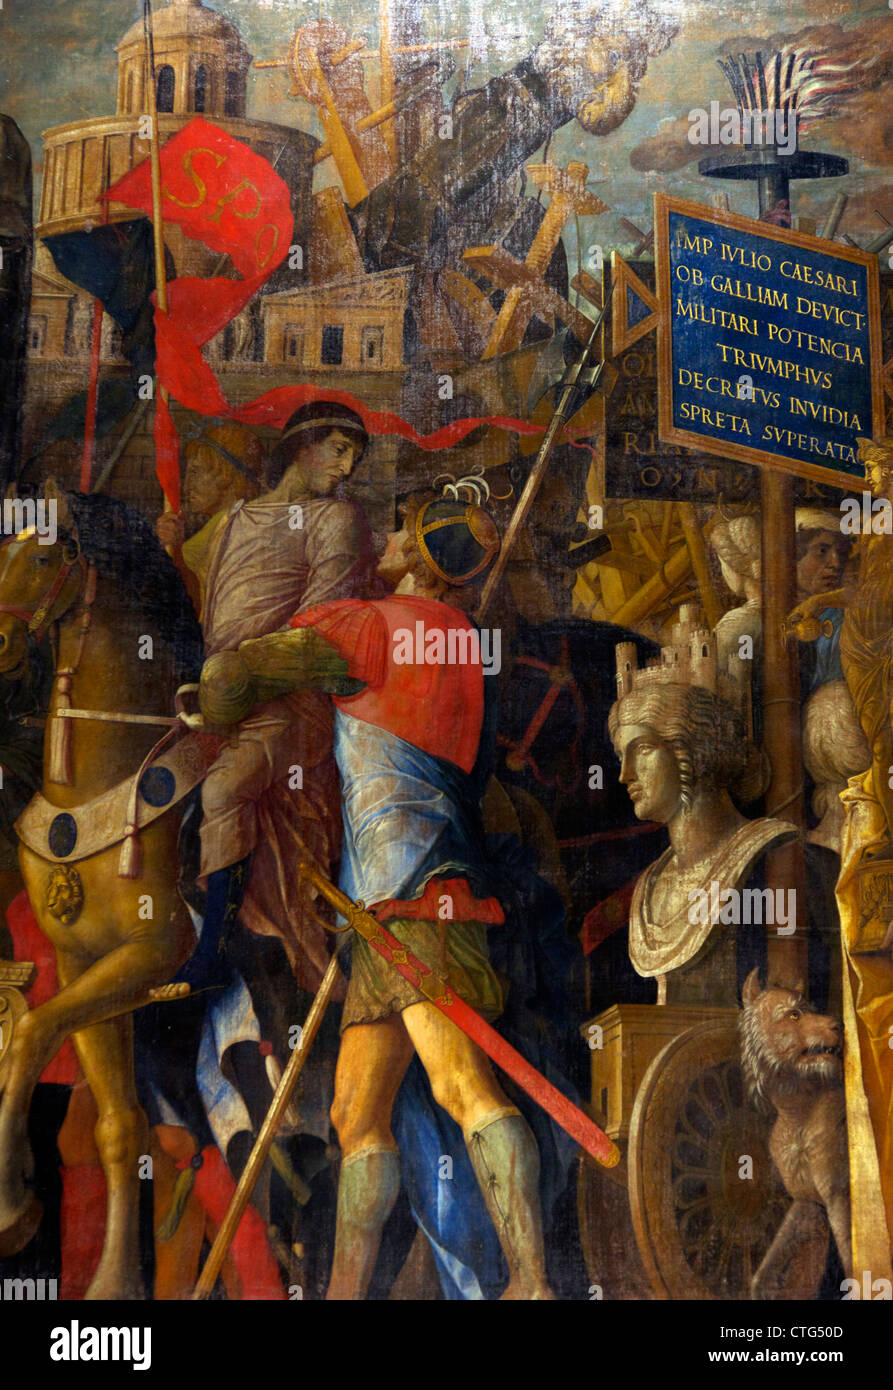 Detalle de los carros triunfales, a partir de los triunfos del César, de Andrea Mantegna, Foto de stock